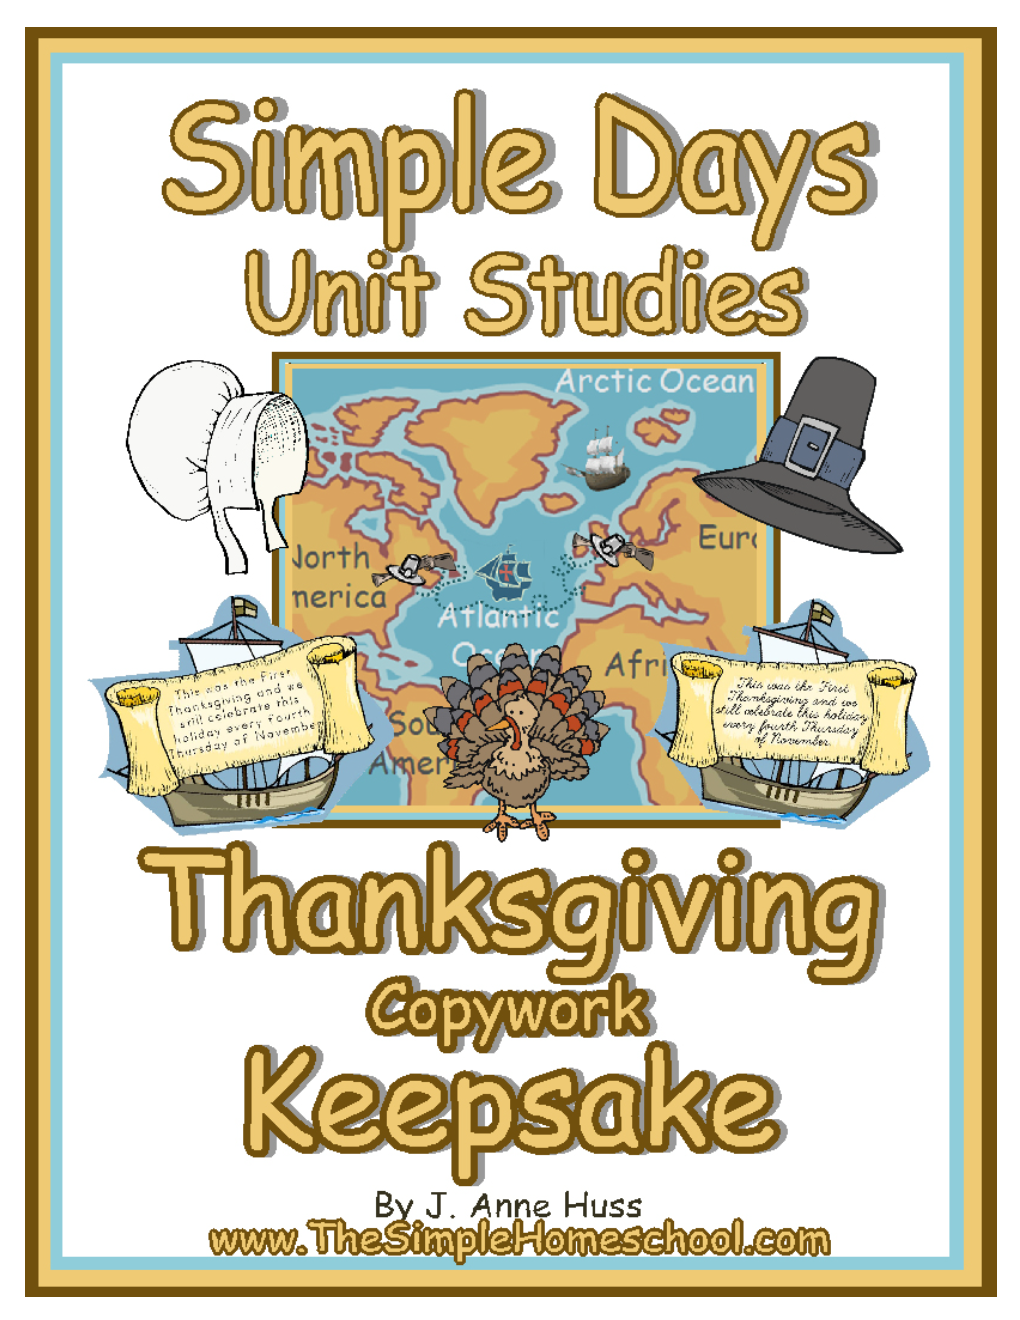 Keepsake Thanksgiving Copywork